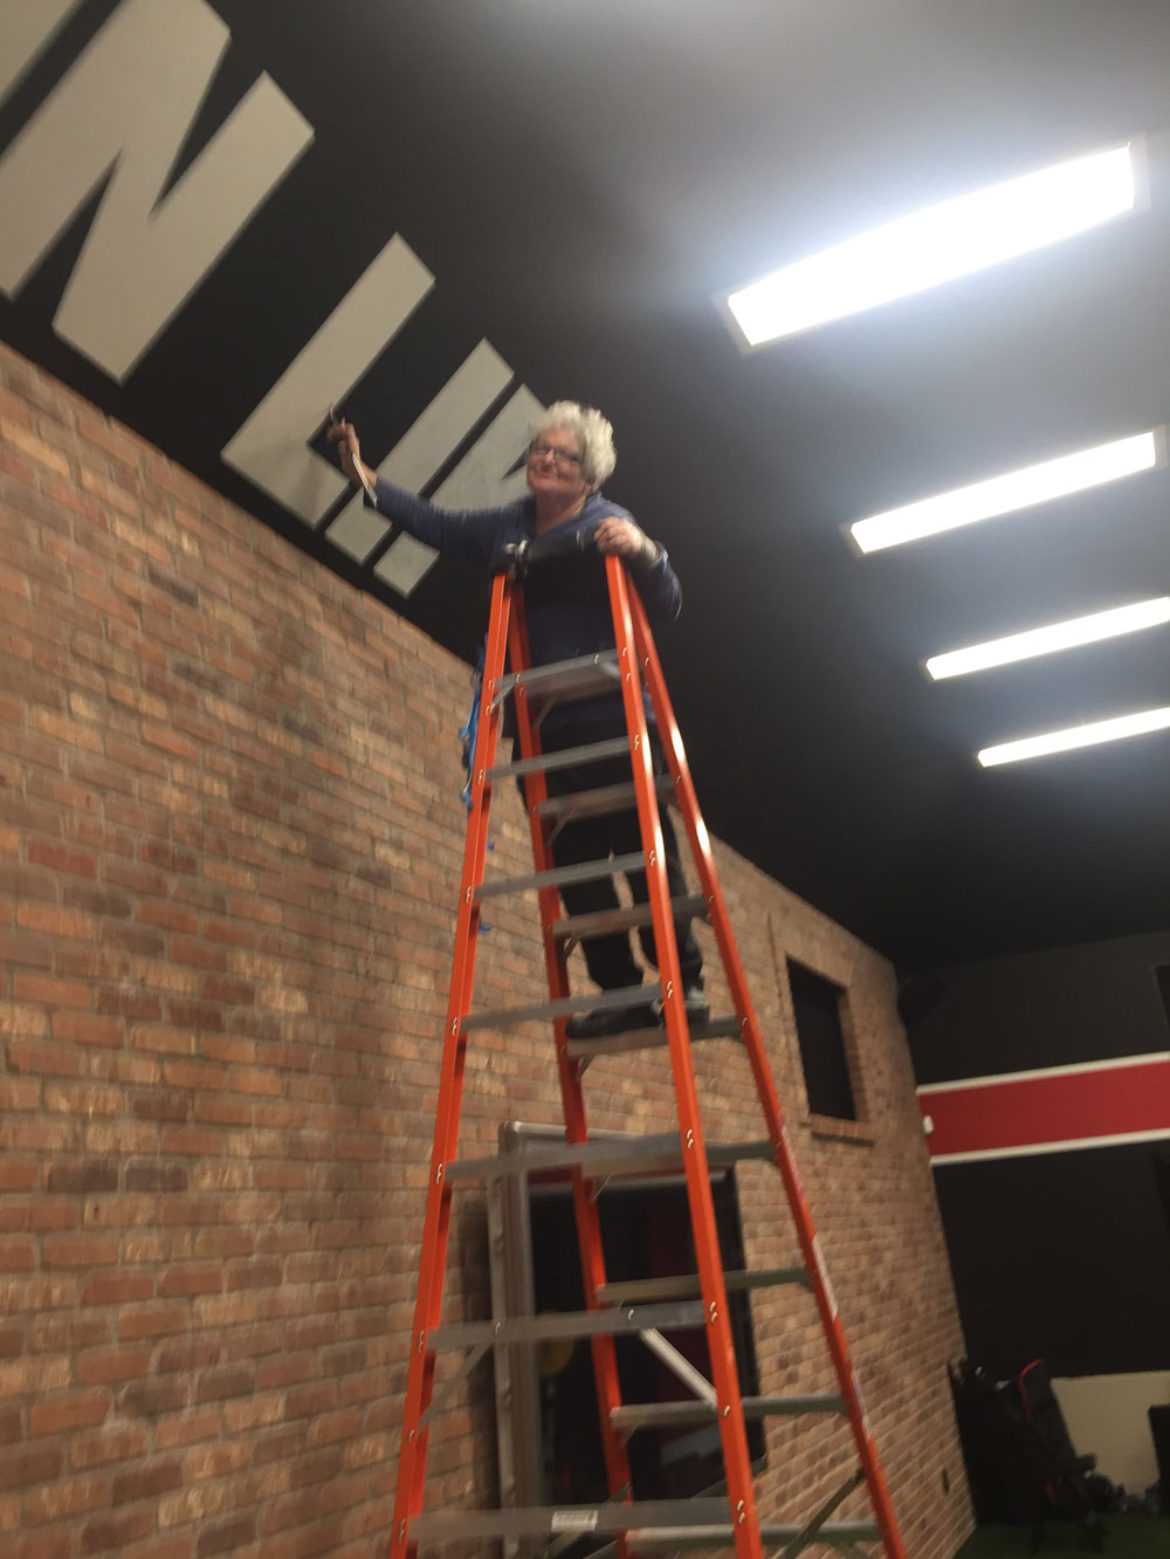 Sharon on Ladder at Gym